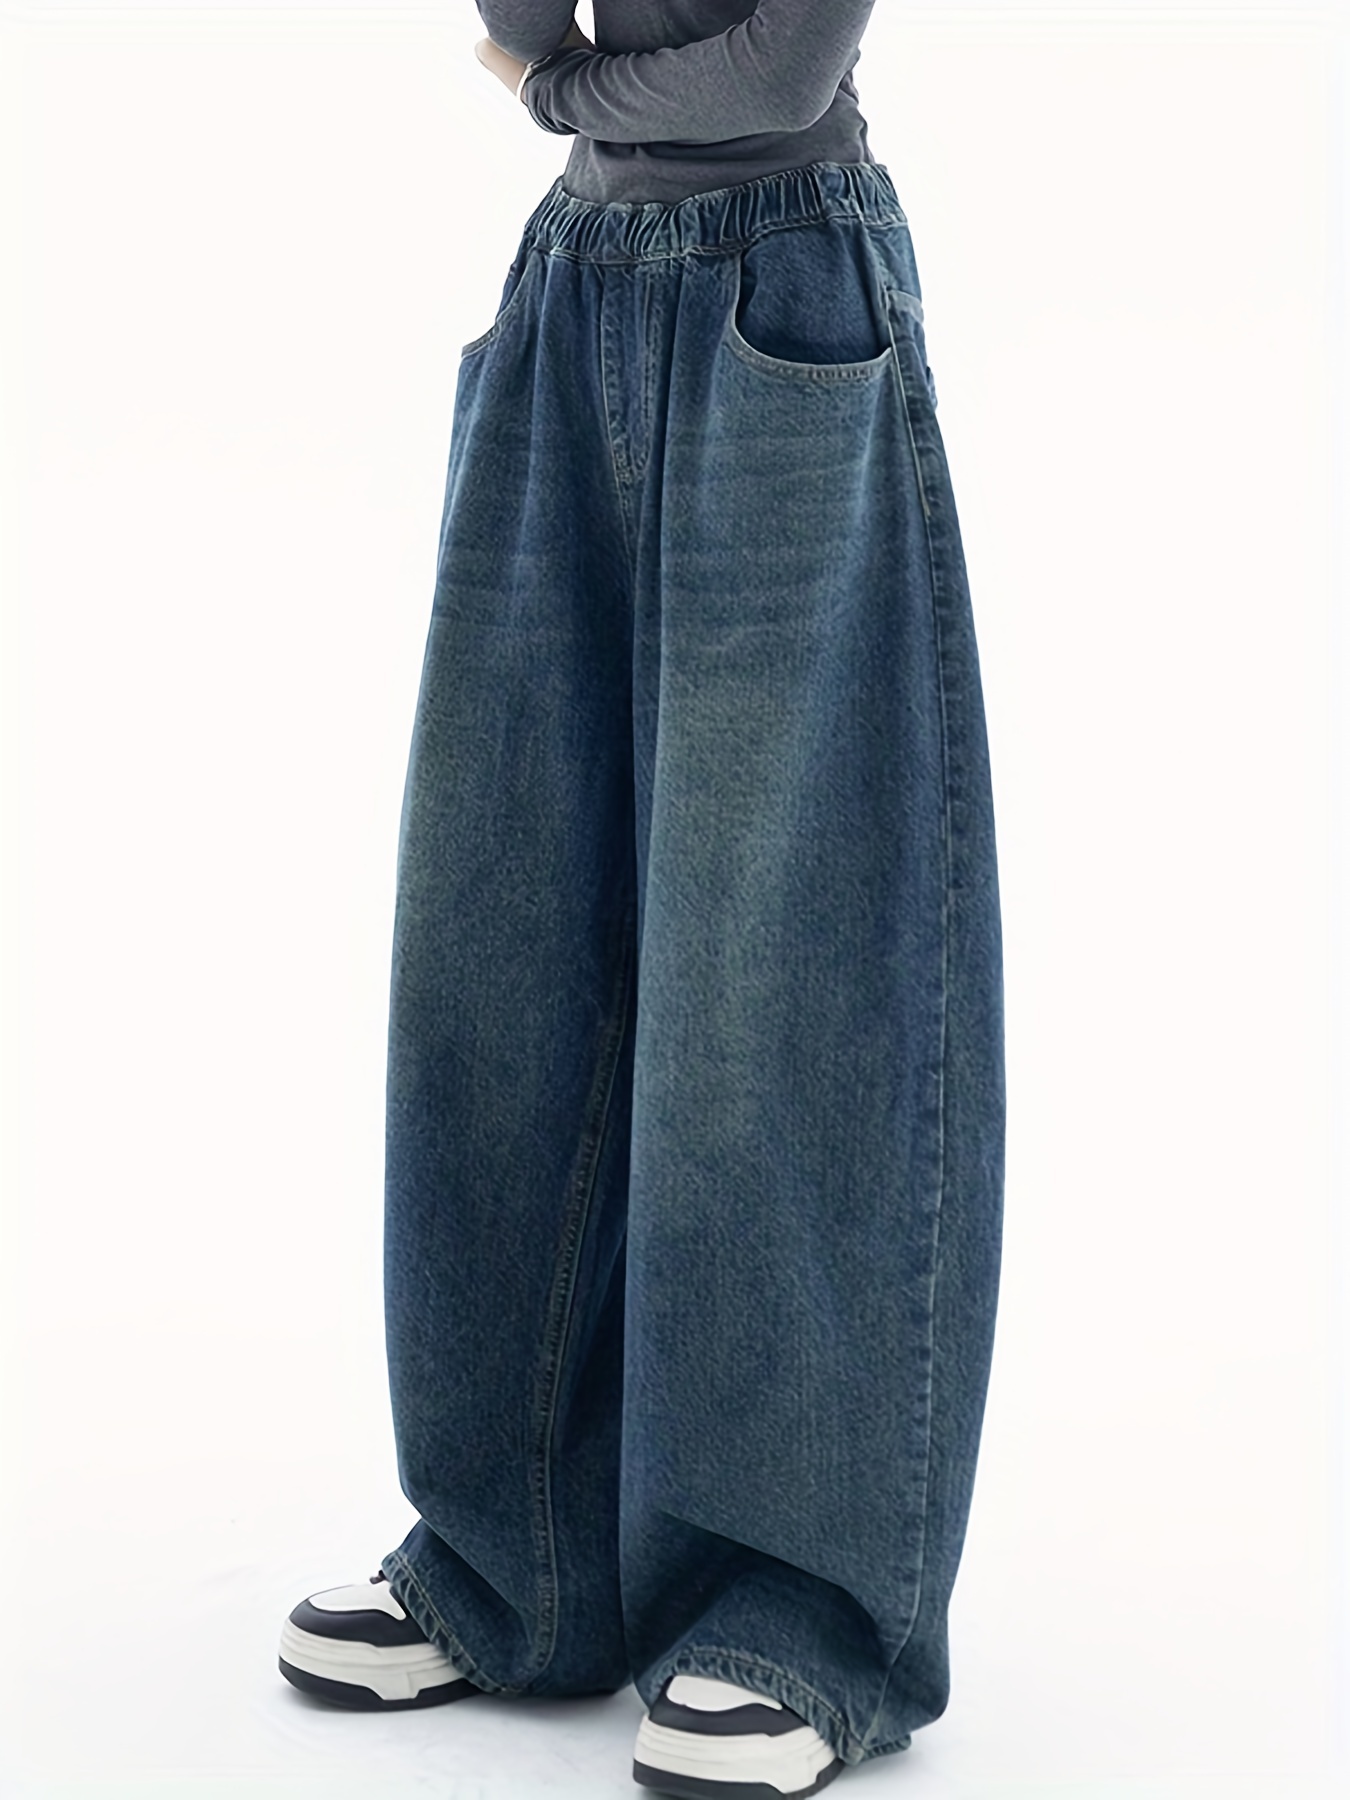 Buy Women's Classic Denim Jeans Wide Leg Elastic High Waist